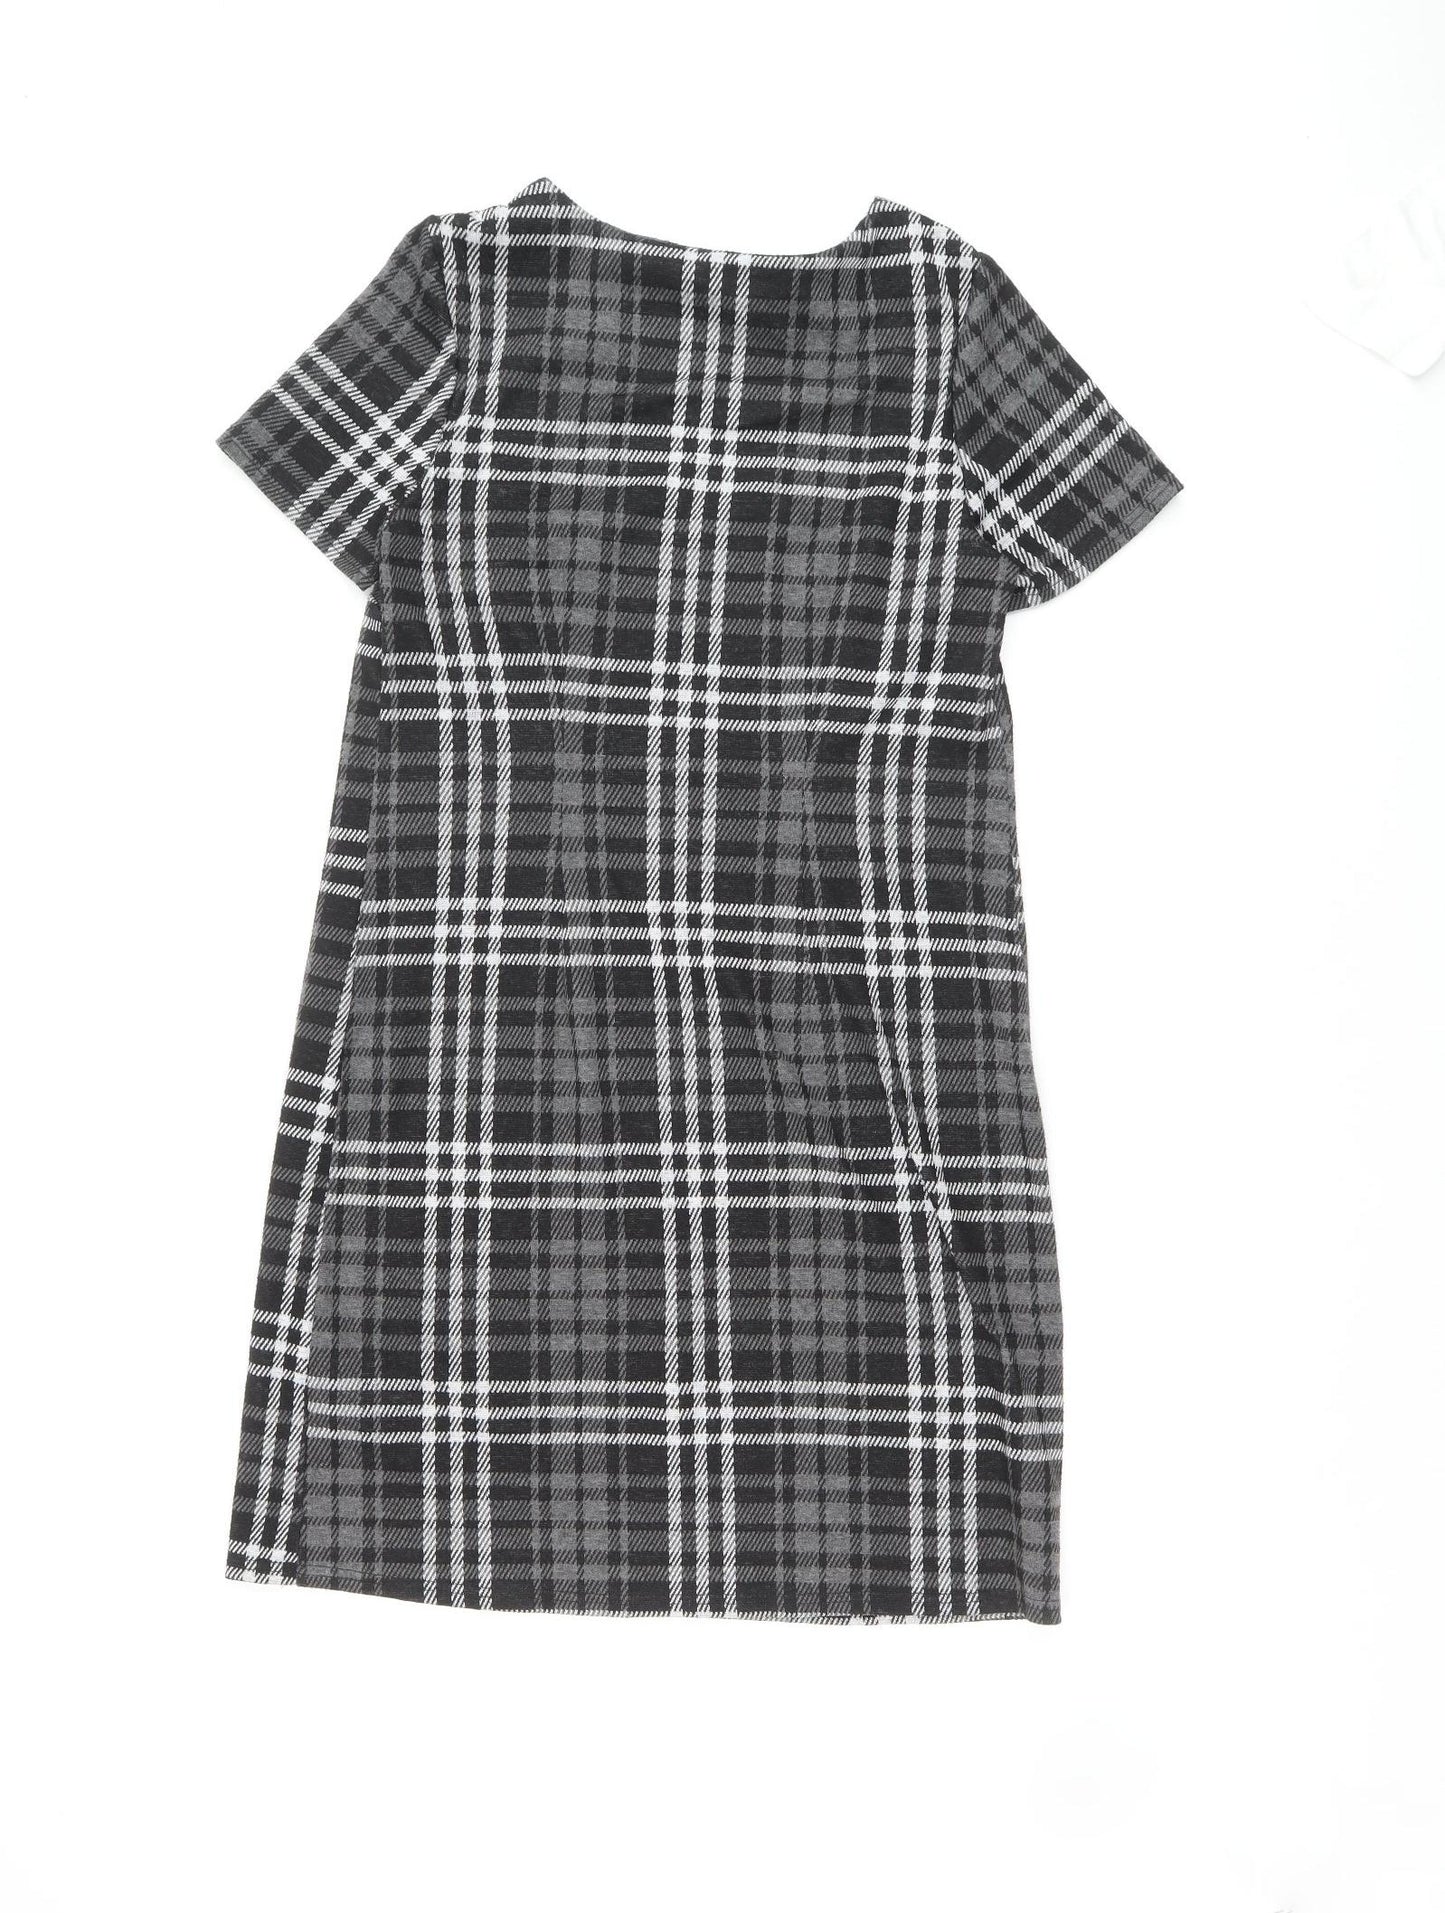 ET VOUS Womens Black Plaid Polyester A-Line Size 10 Round Neck Pullover